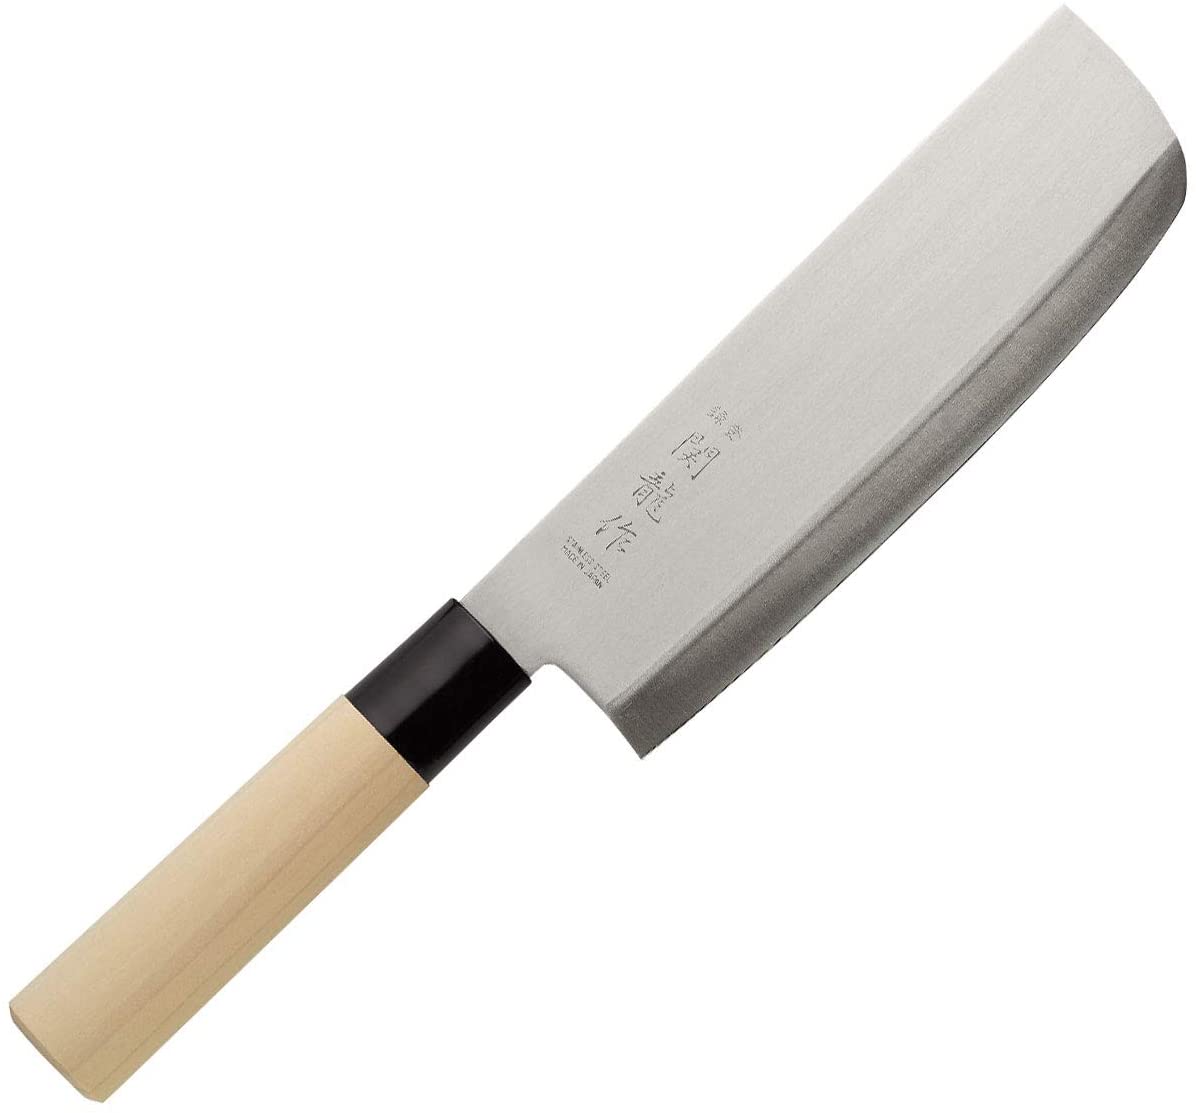 TUO Nakiri Knife - Vegetable Cleaver Kitchen Knives - Japanese